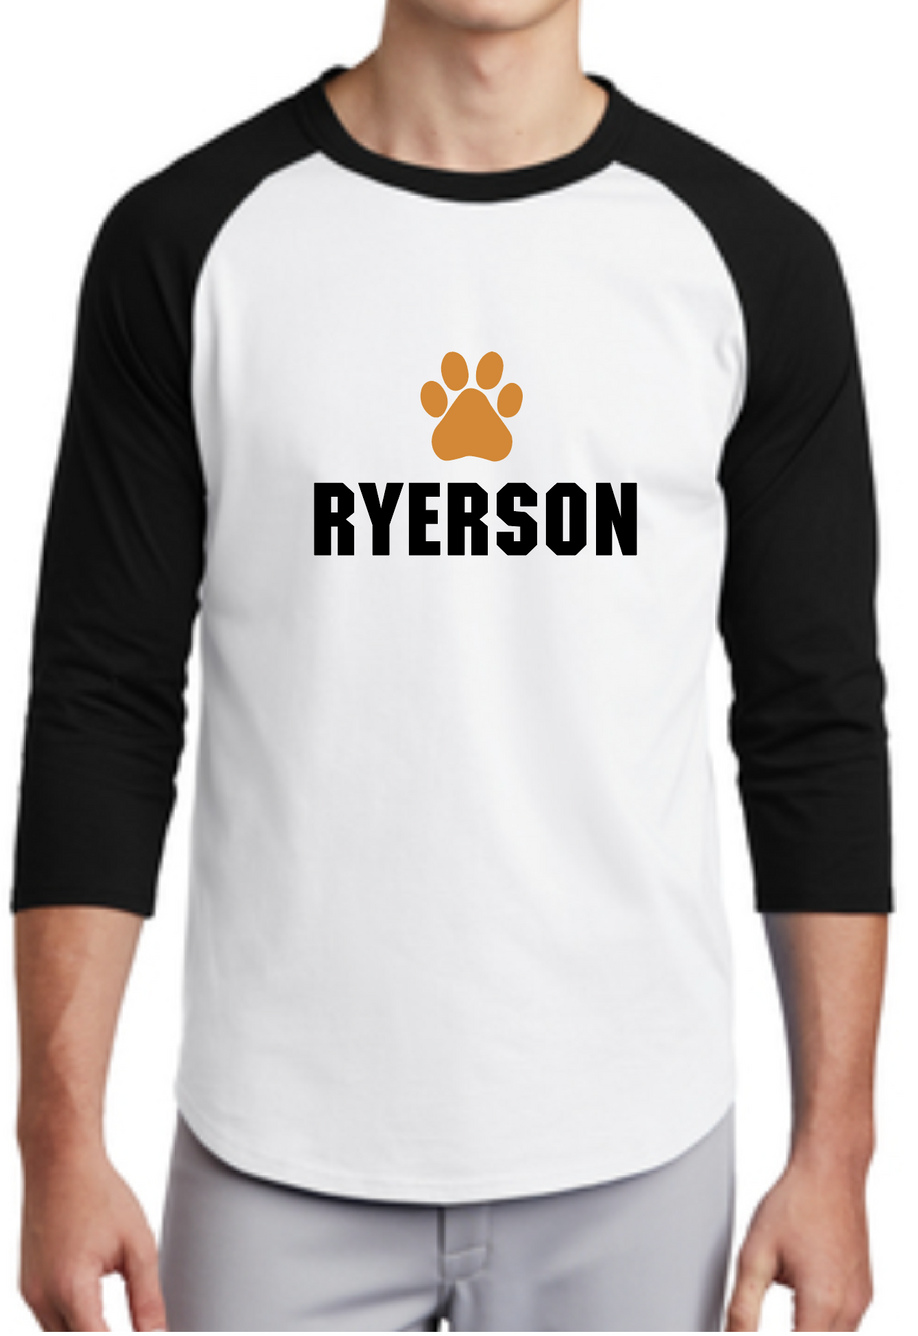 Ryerson - Colorblock Raglan Jersey